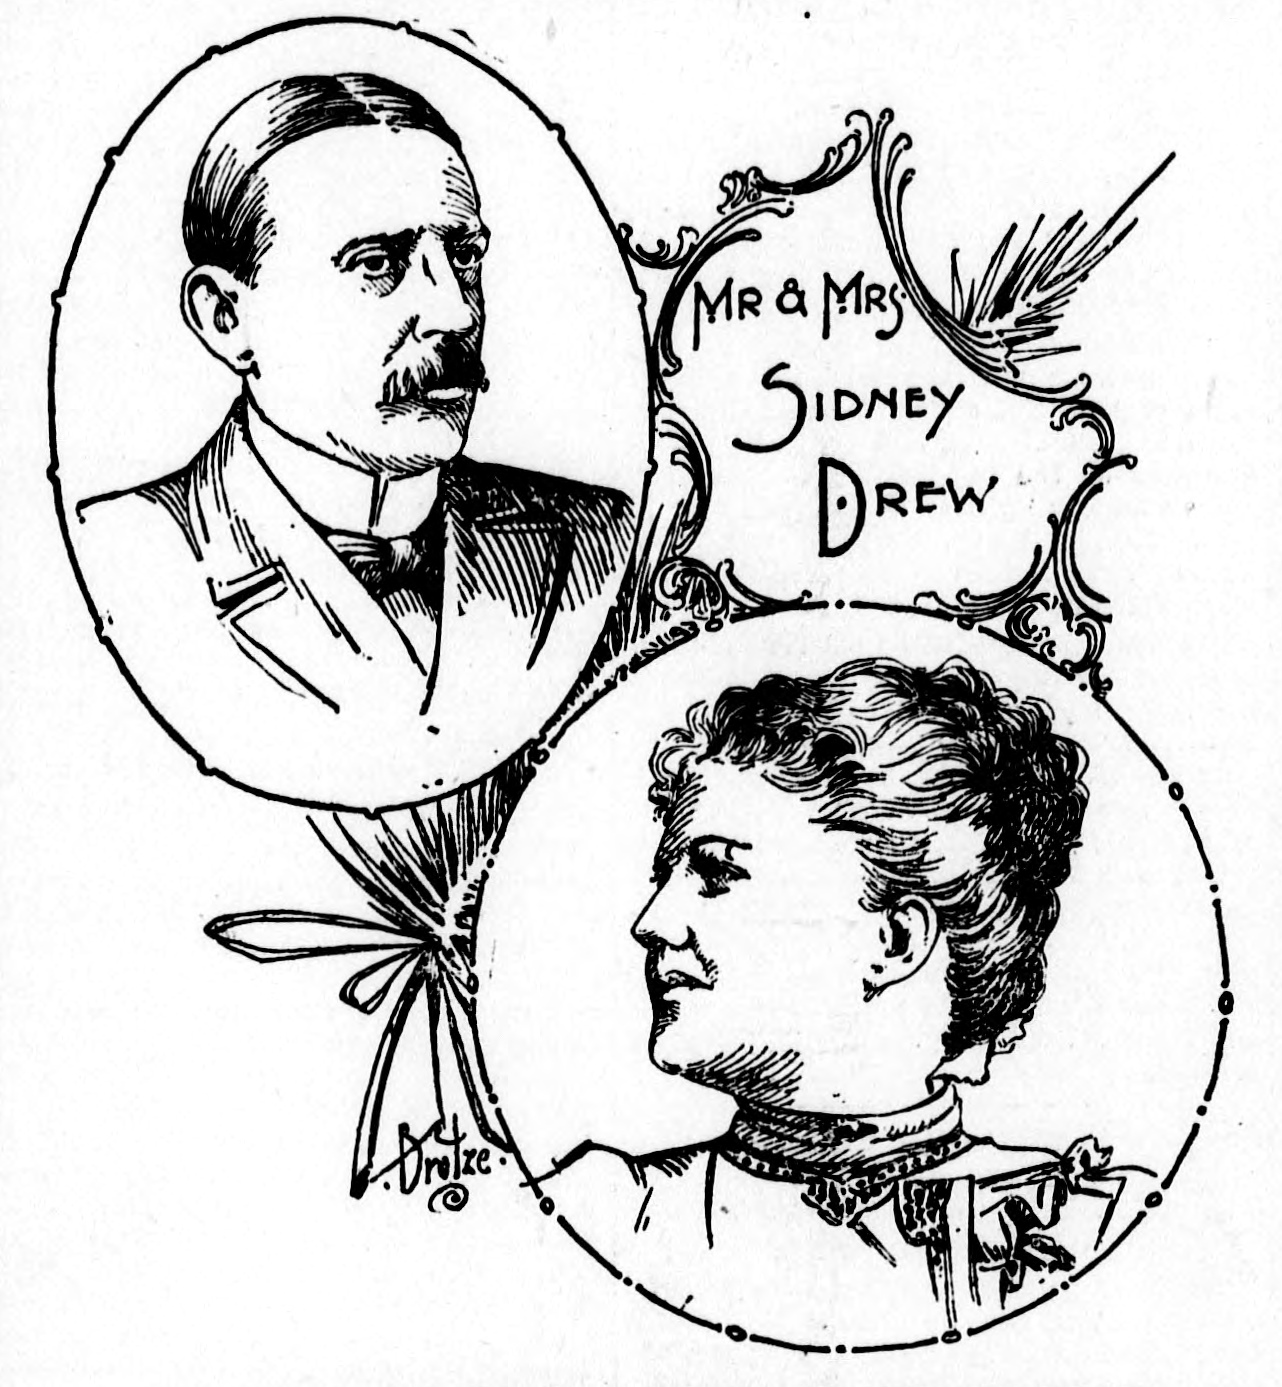 Mr. & Mrs. Sidney Drew (Gladys Rankin), 1898